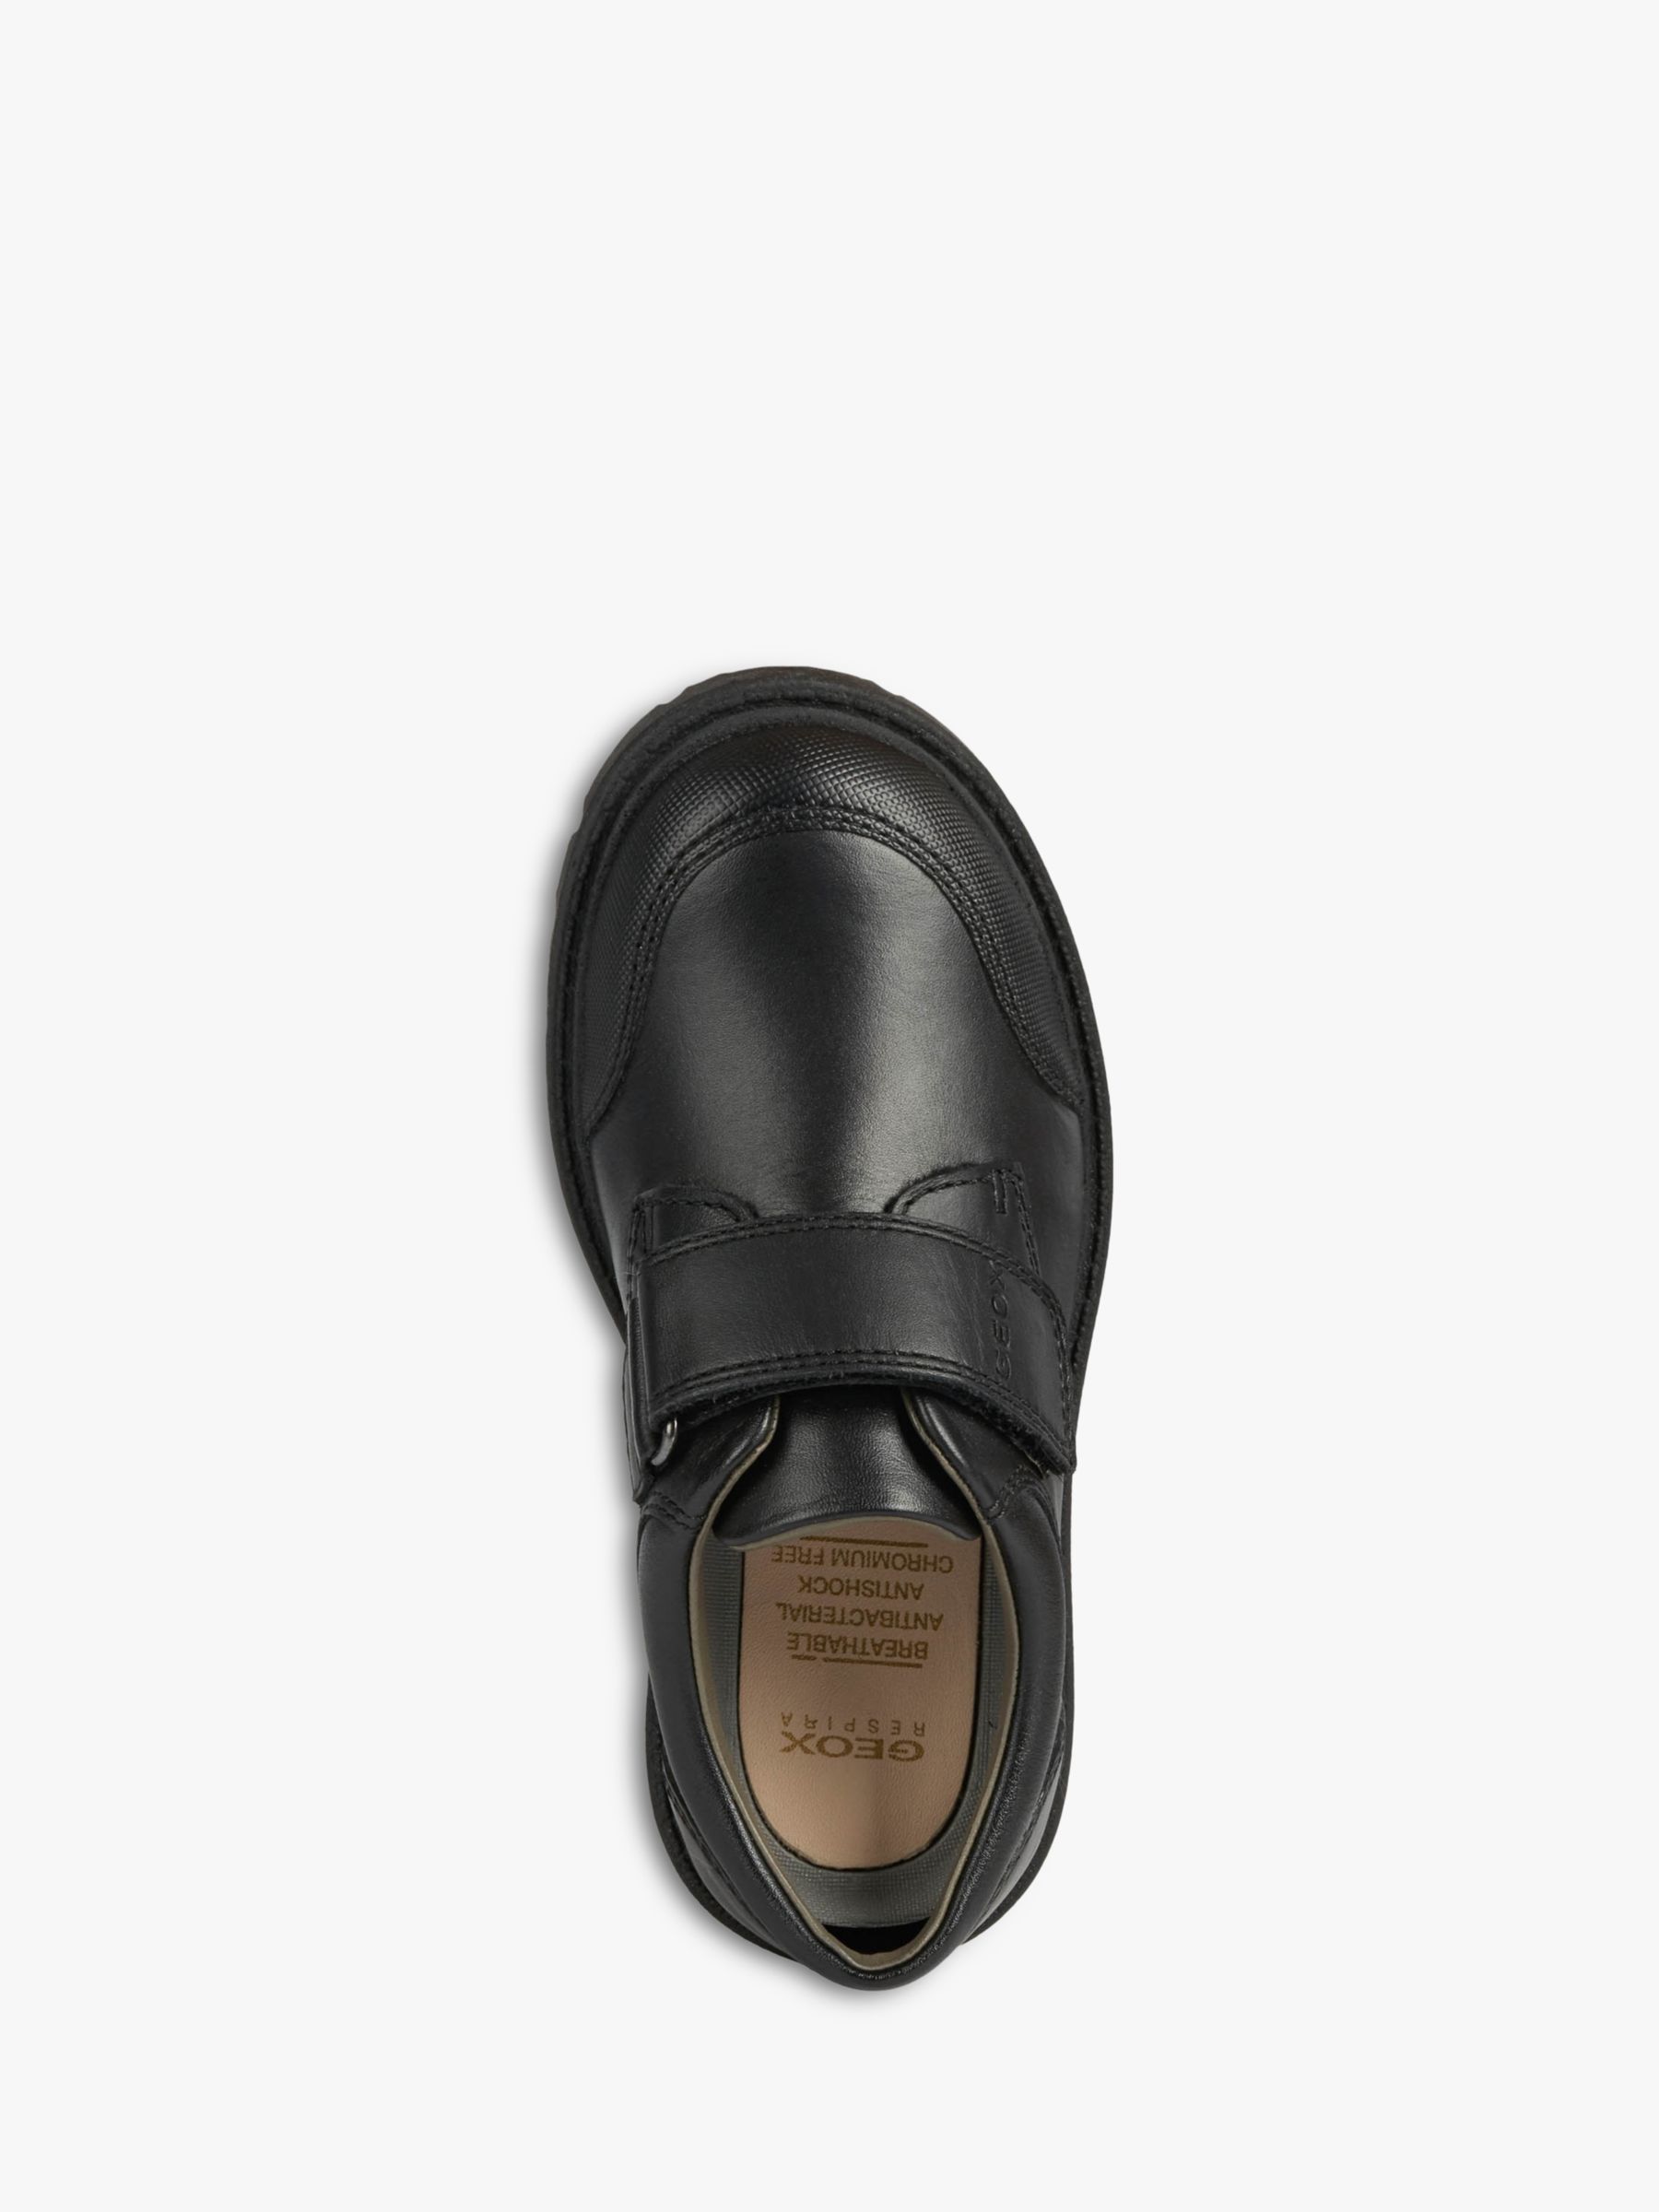 Geox Kids' Shaylax Leather School Shoes, Black, EU35